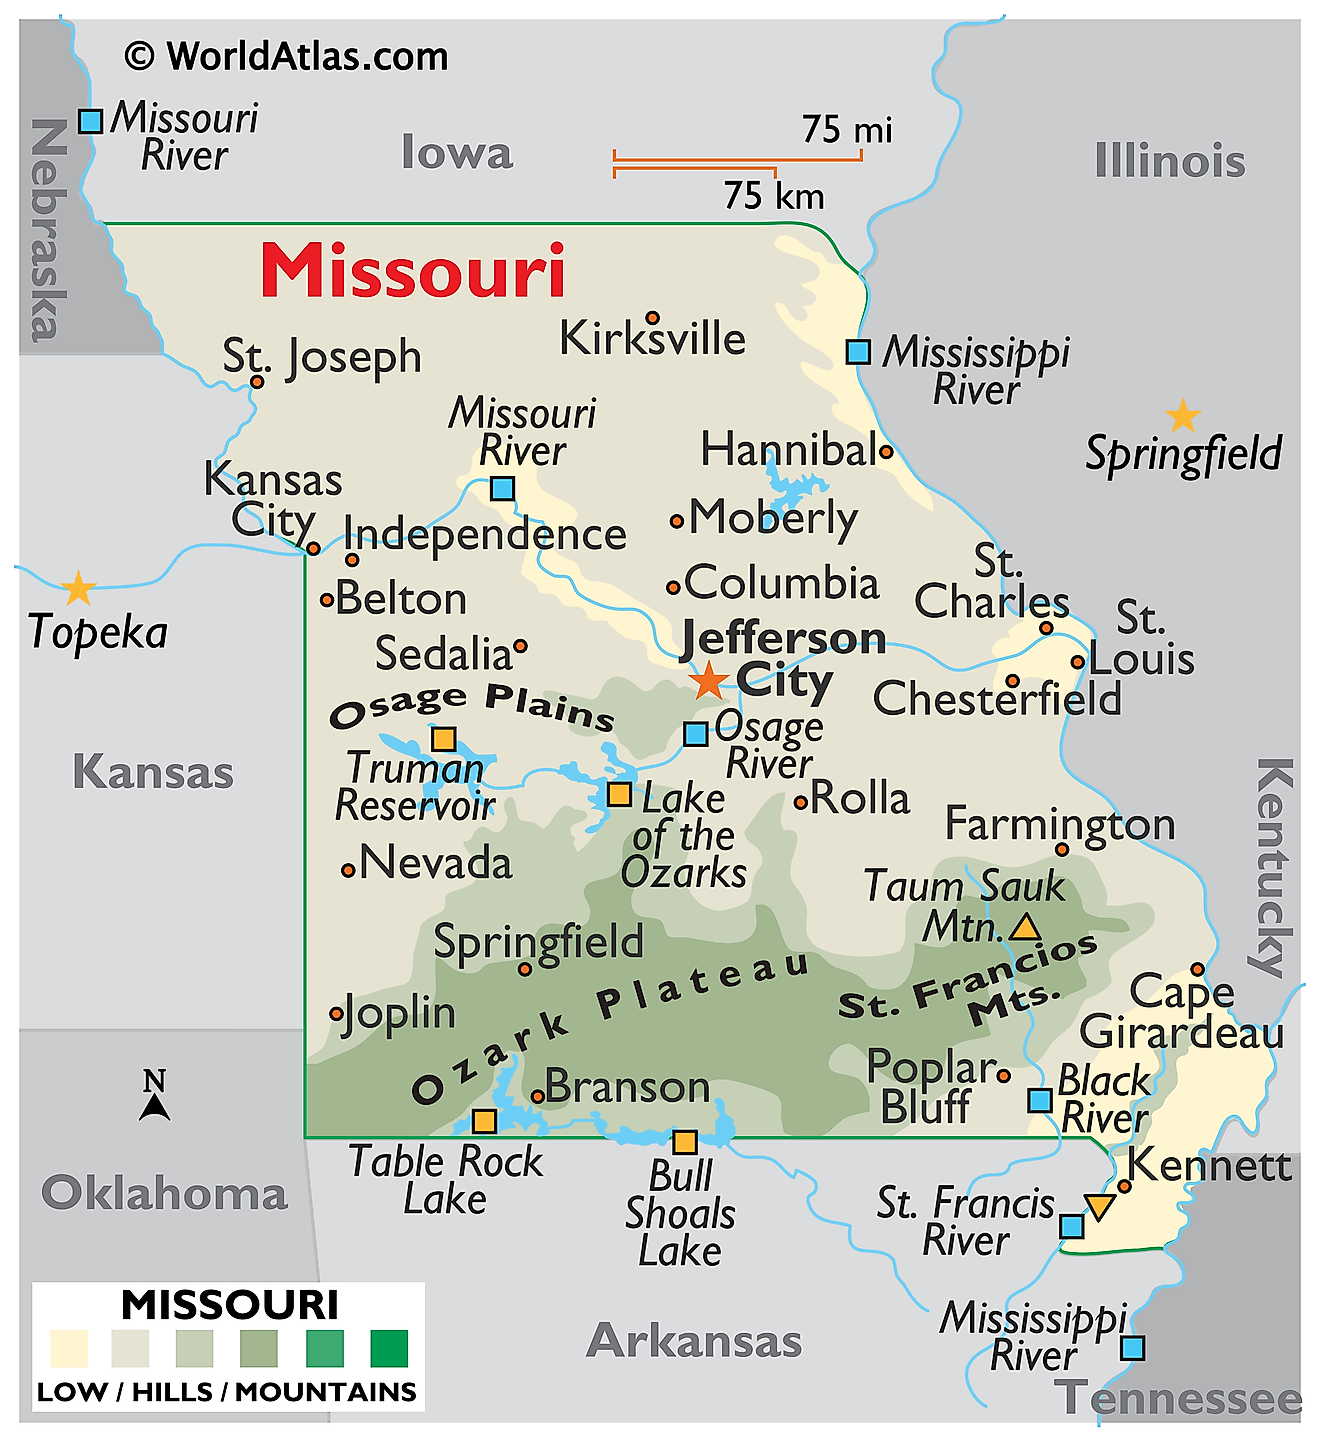 St. Louis, Missouri - WorldAtlas